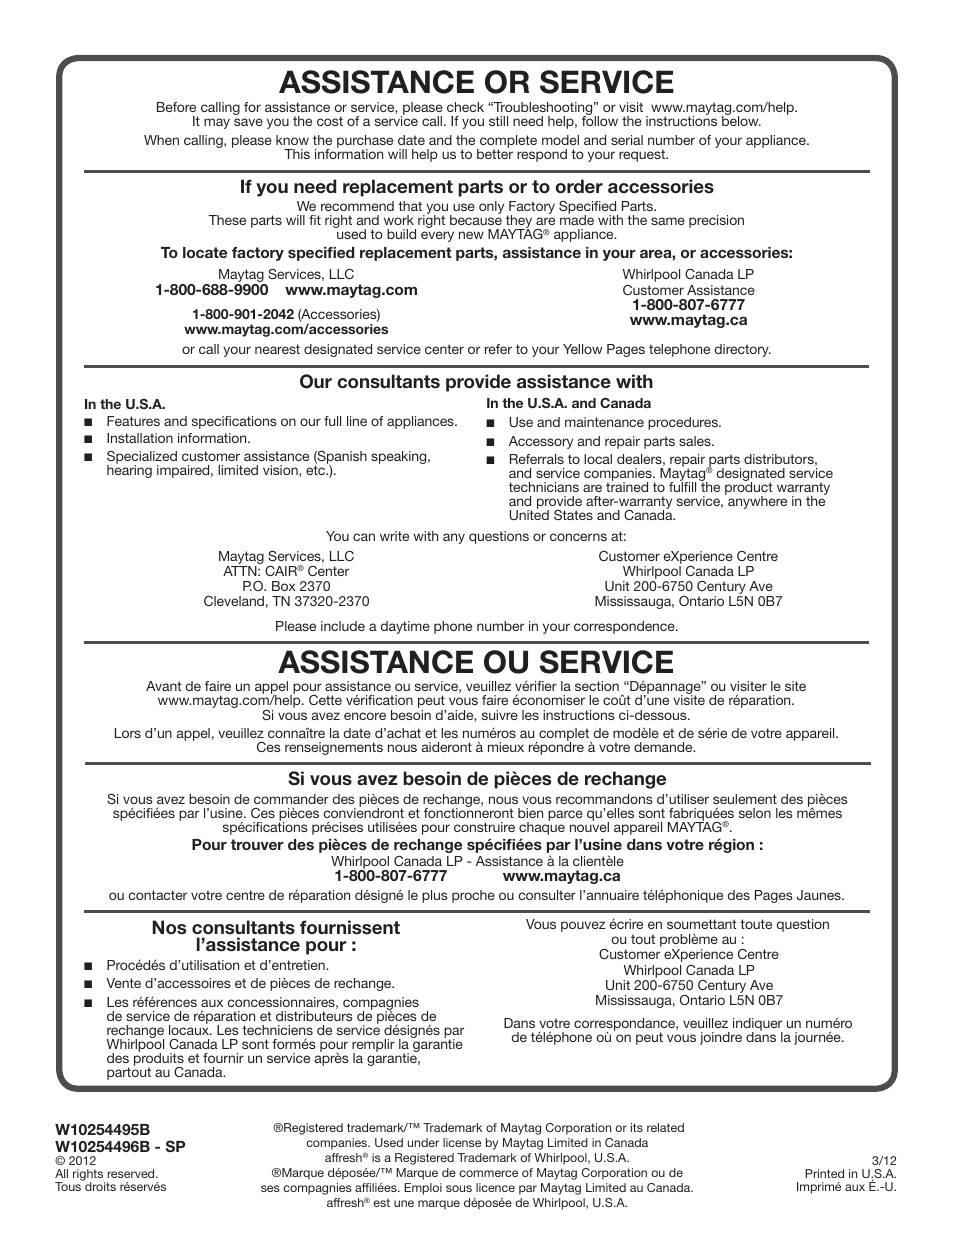 assistance or service, assistance ou service, our consultants